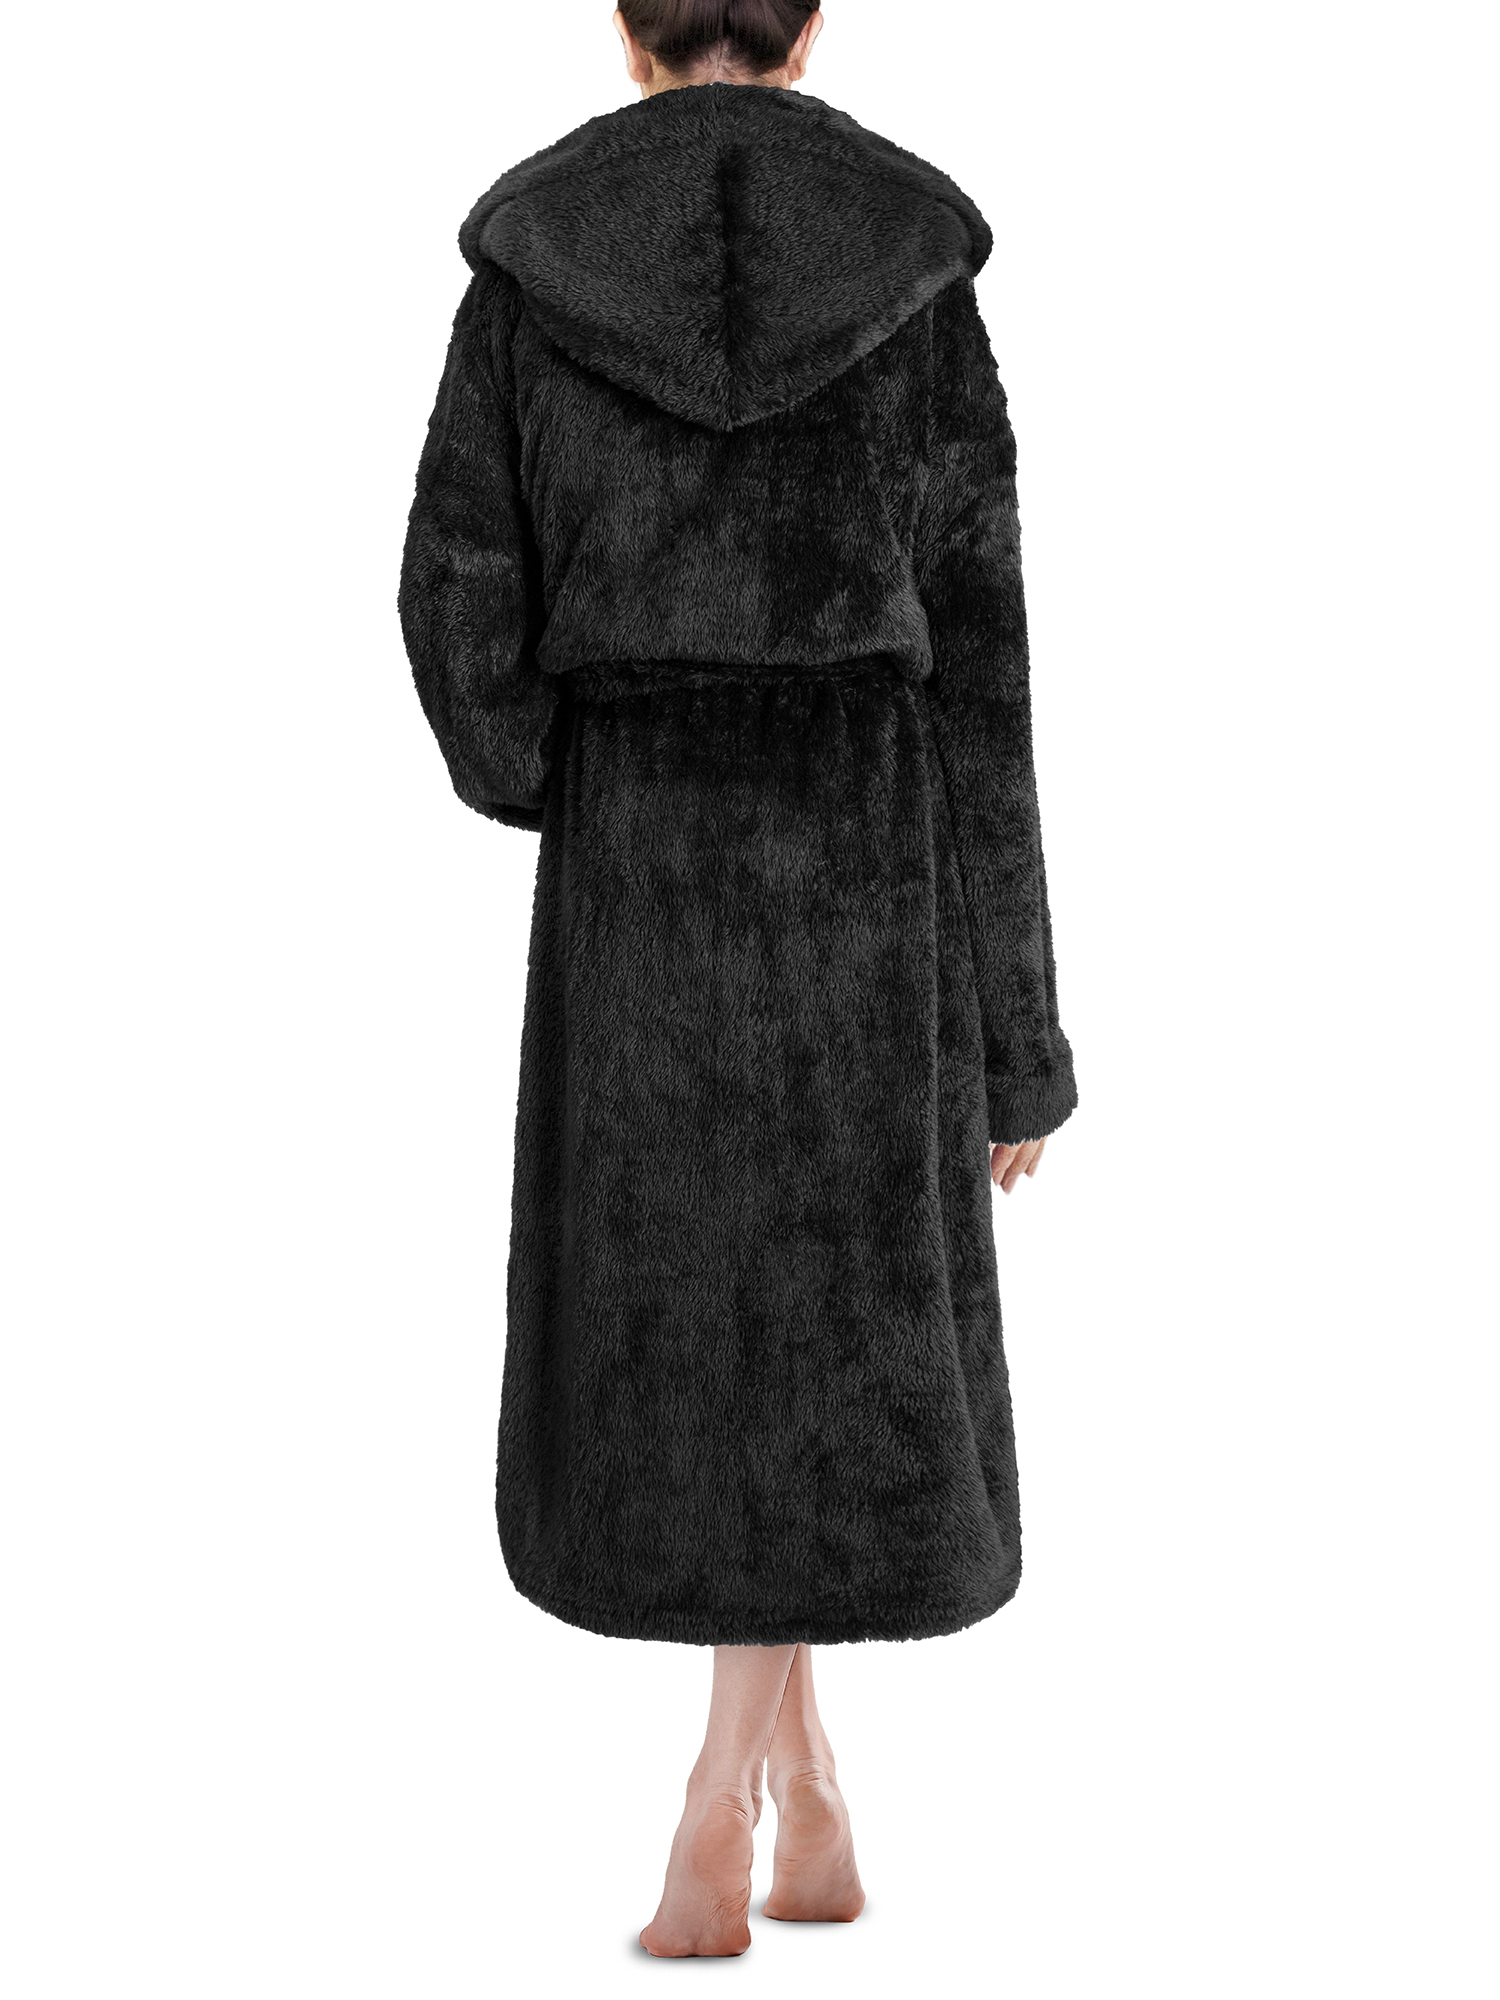 PAVILIA Women Hooded Plush Soft Robe | Fluffy Warm Fleece Sherpa Shaggy Bathrobe (L/XL, Black) - image 2 of 7